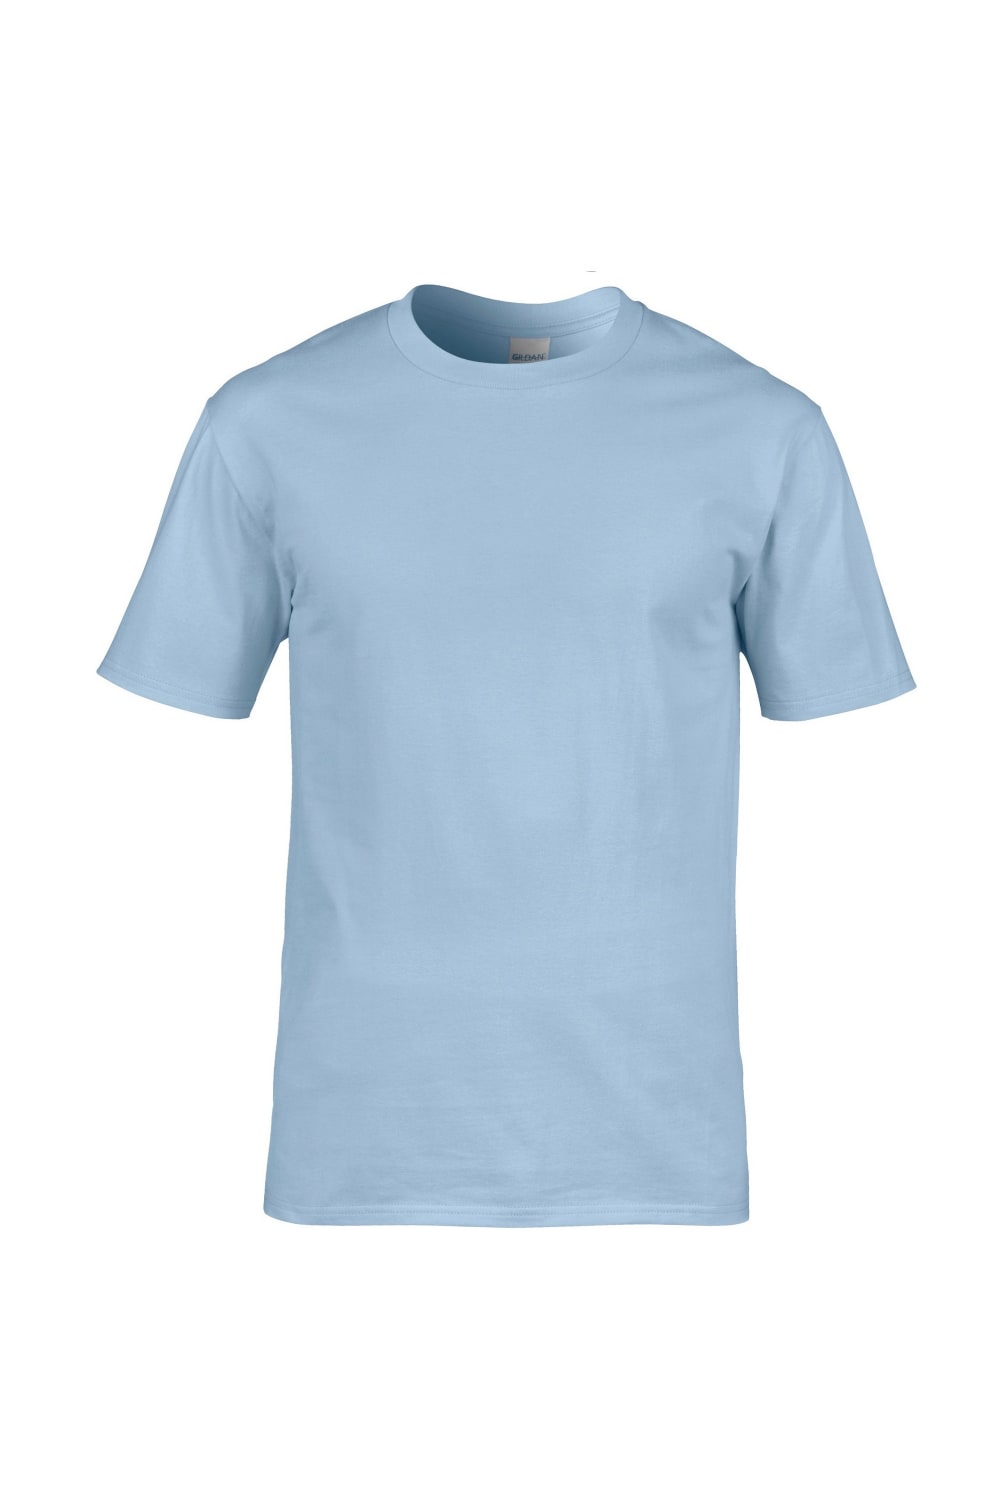 Gildan Mens Premium Cotton Ring Spun Short Sleeve T-Shirt (Light Blue)